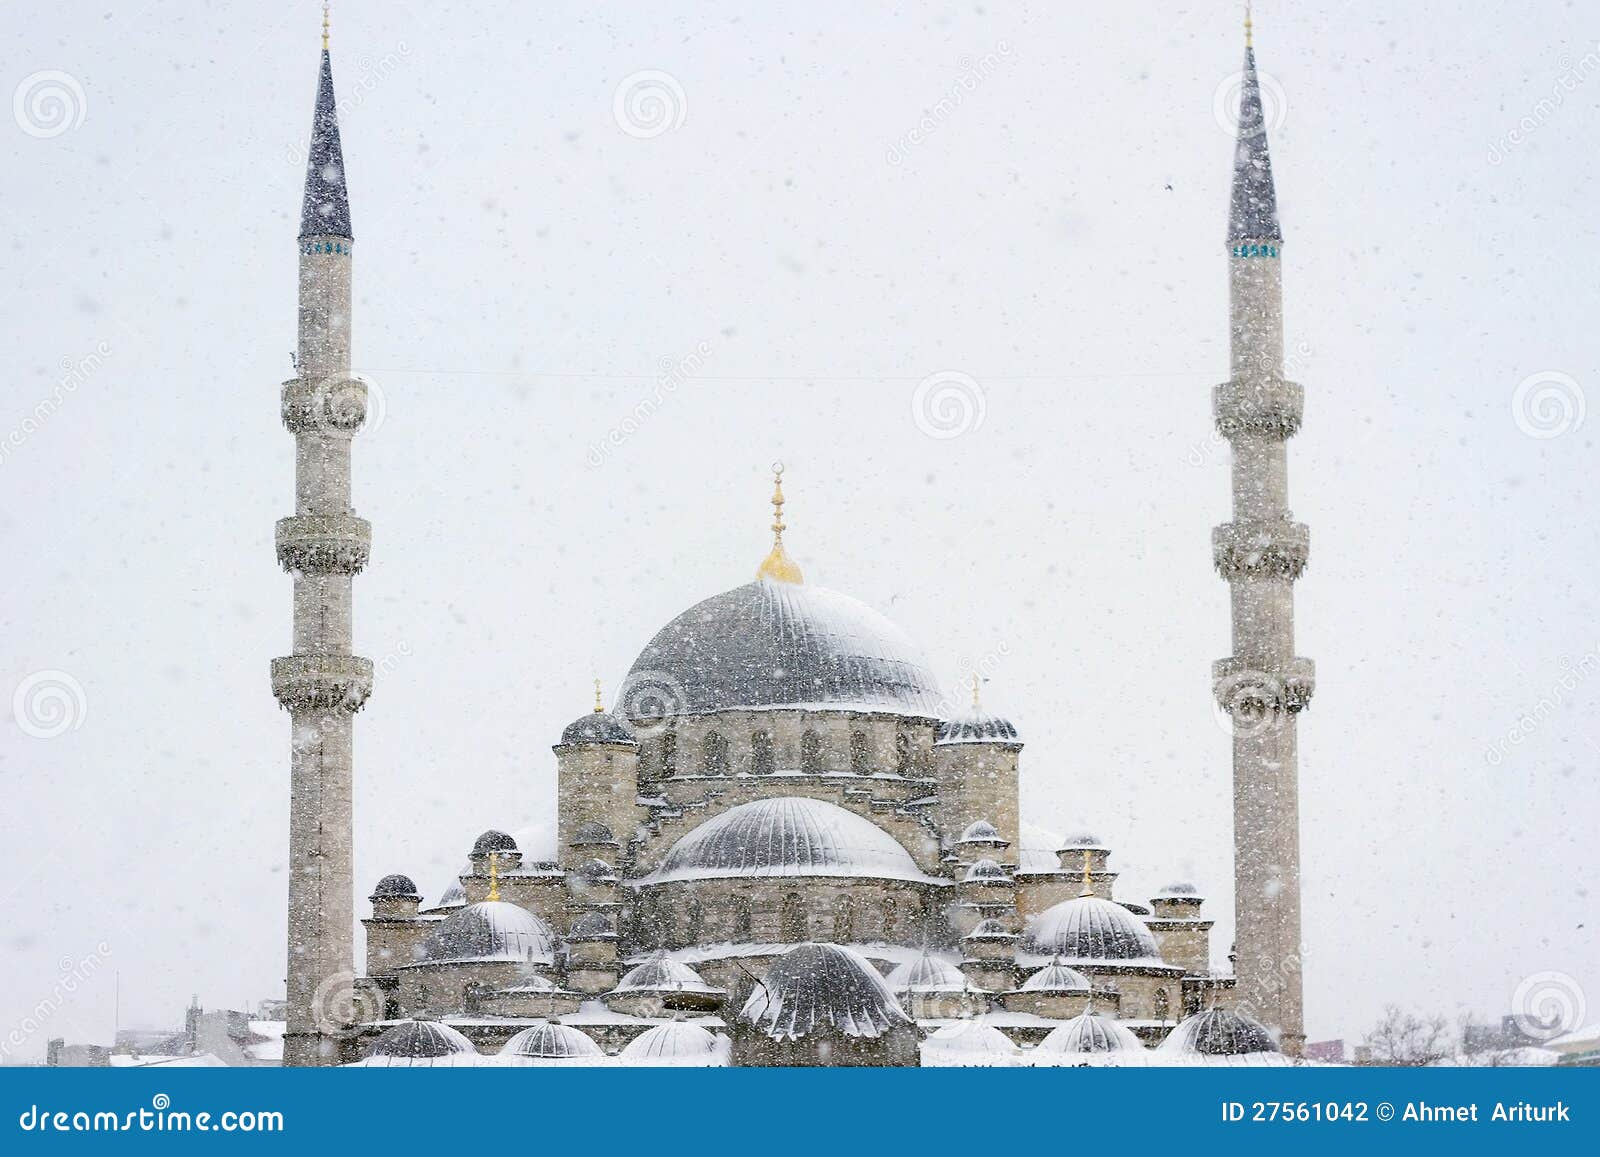 yeni mosque in snowfall